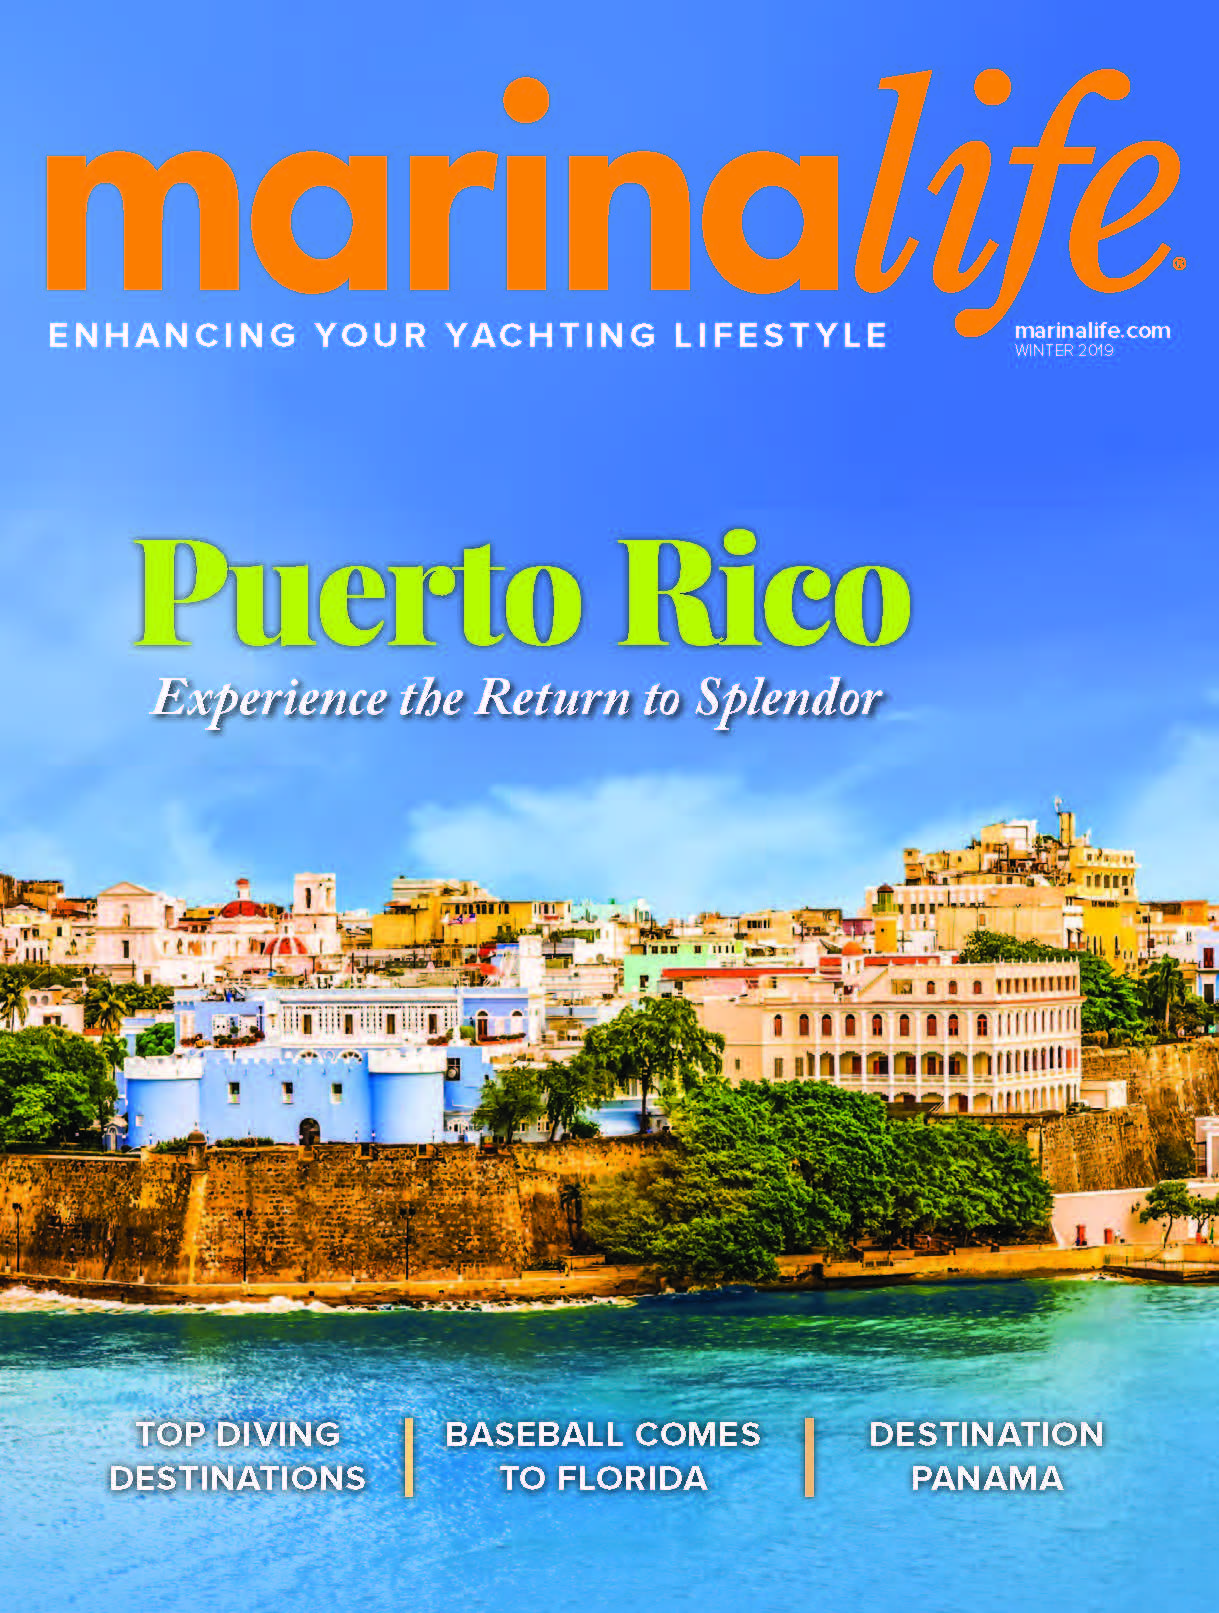 Marinalife Winter 2019 Magazine Issue - Puerto Rico's Return to Splendor